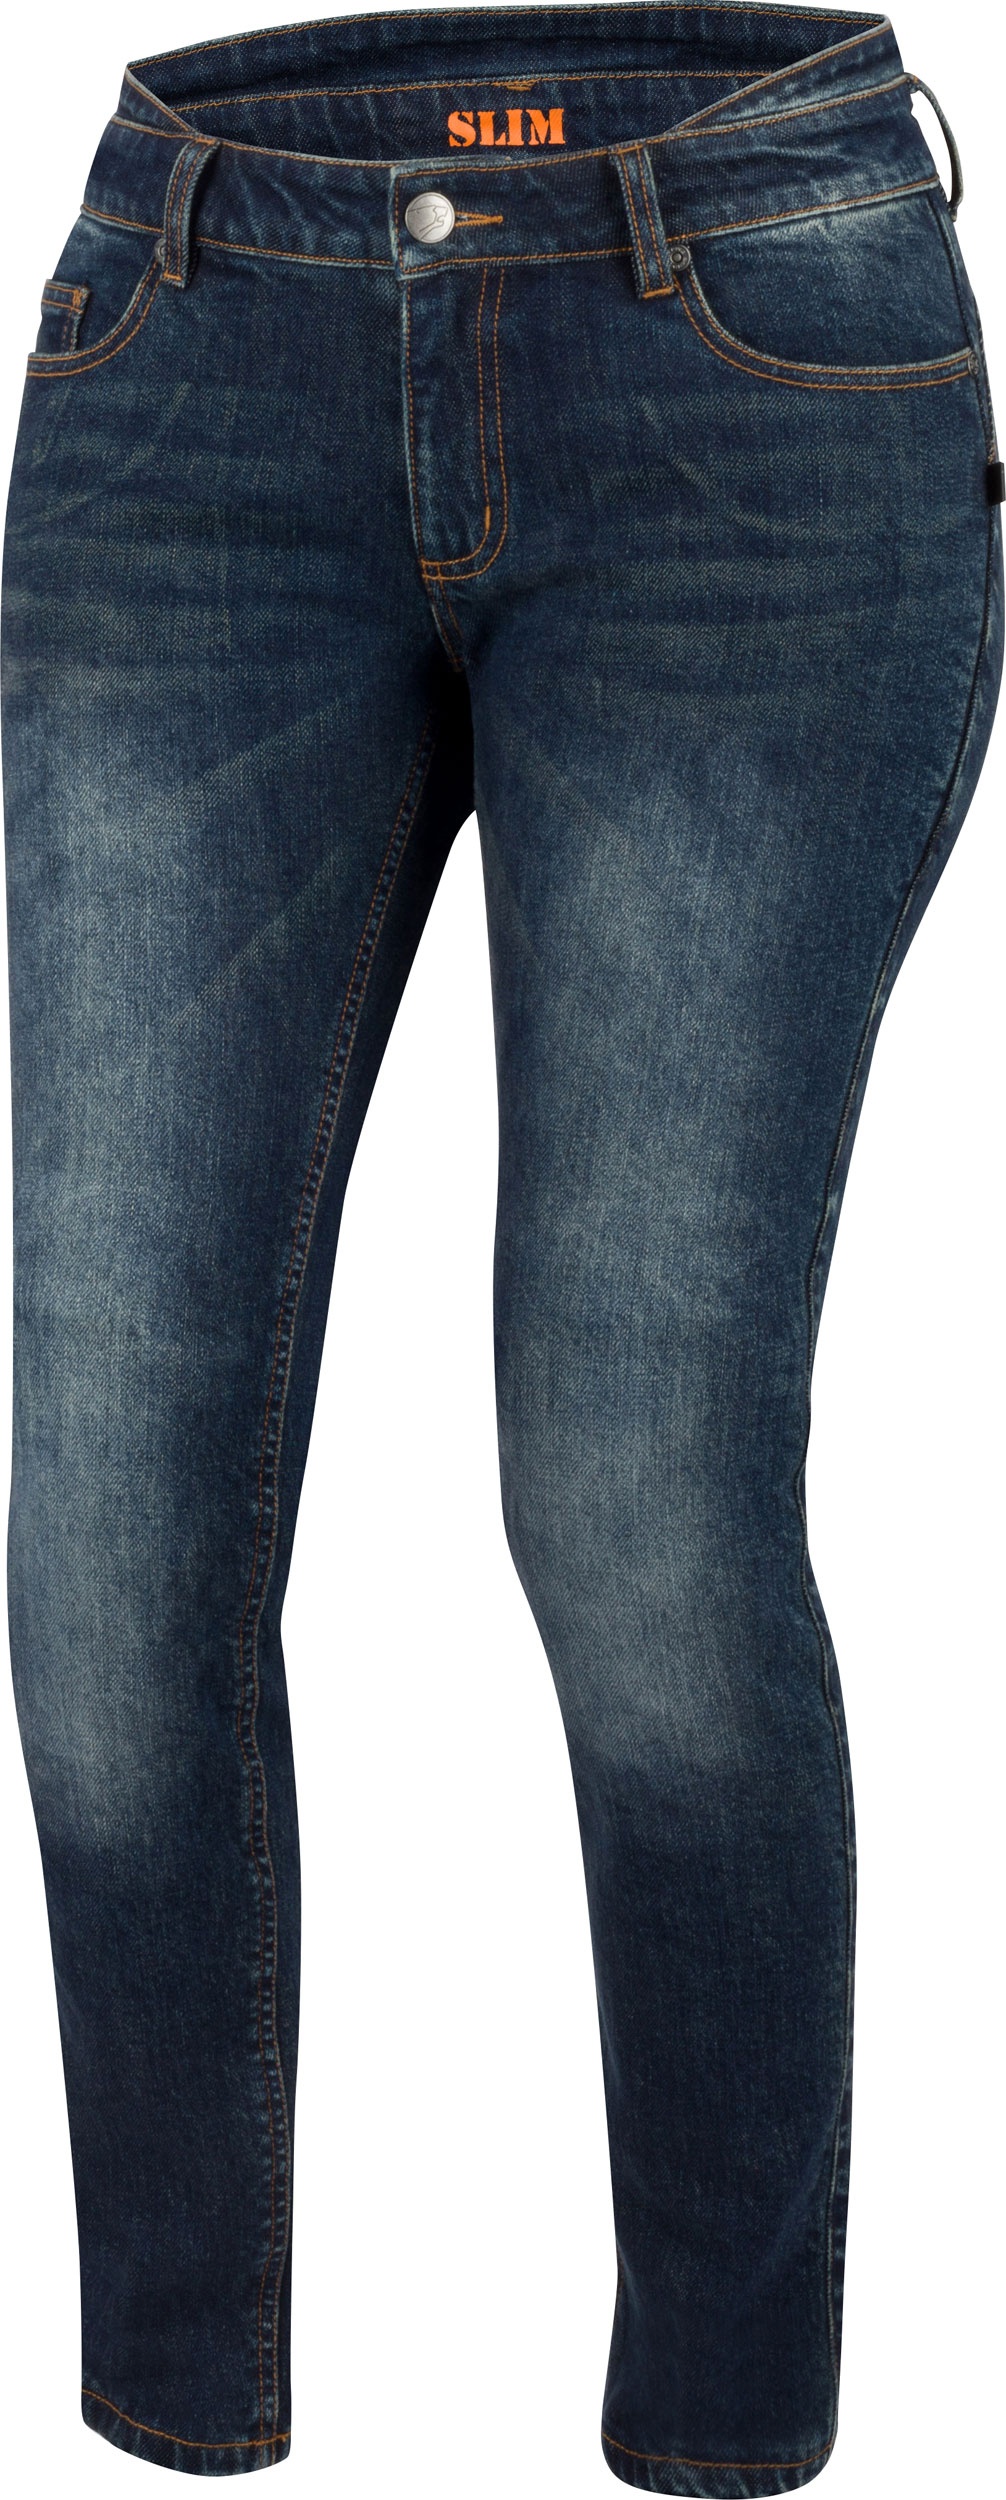 Bering Patricia, jeans femmes - Bleu - T6